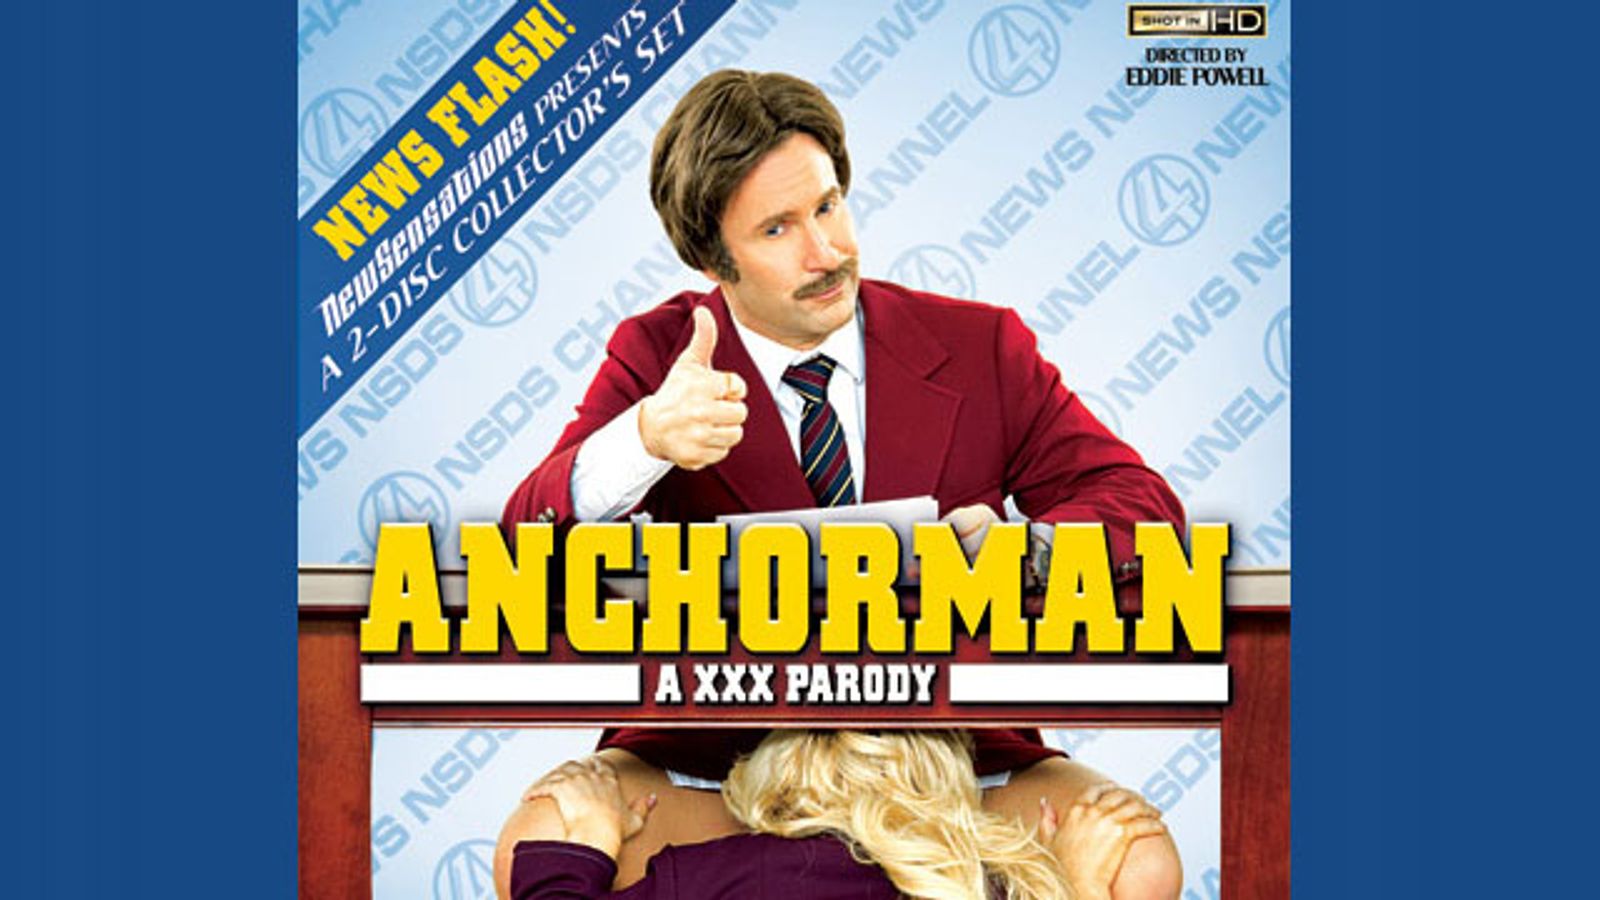 FunnyOrDie.com Gets ‘Anchorman’ Parody Exclusive